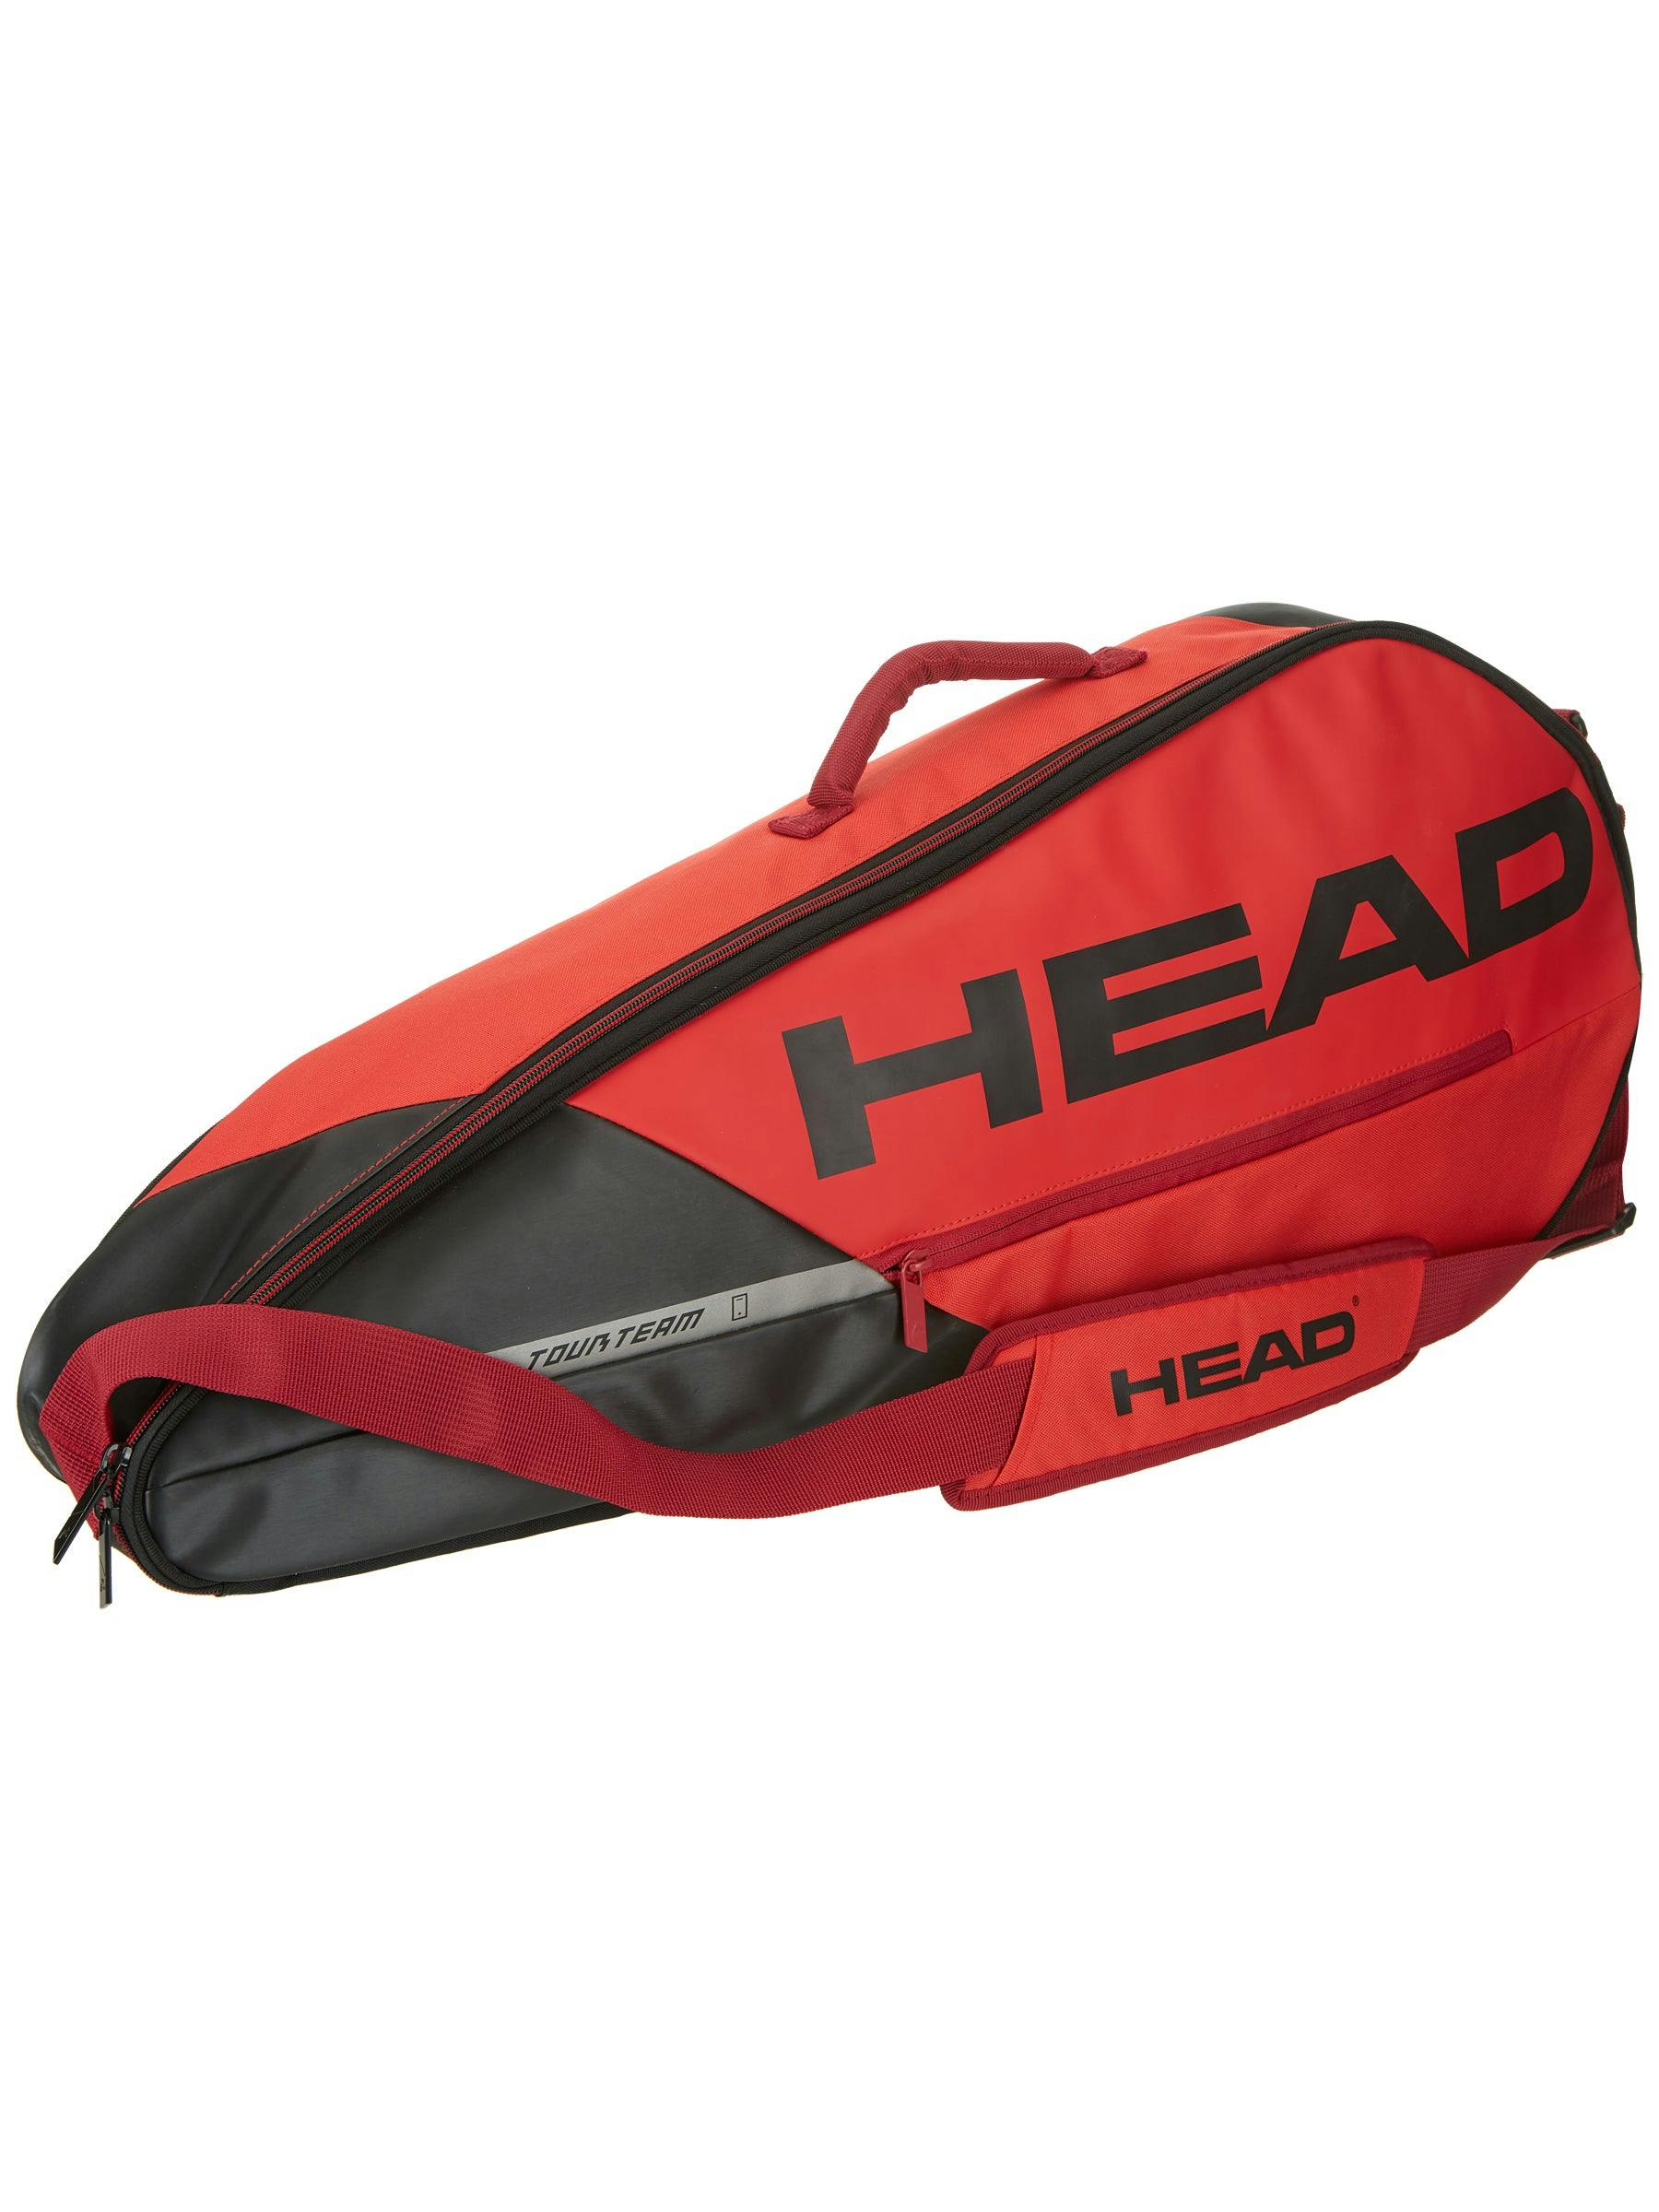 Head Tour Team 3 Racquet Combi Tennis Bag